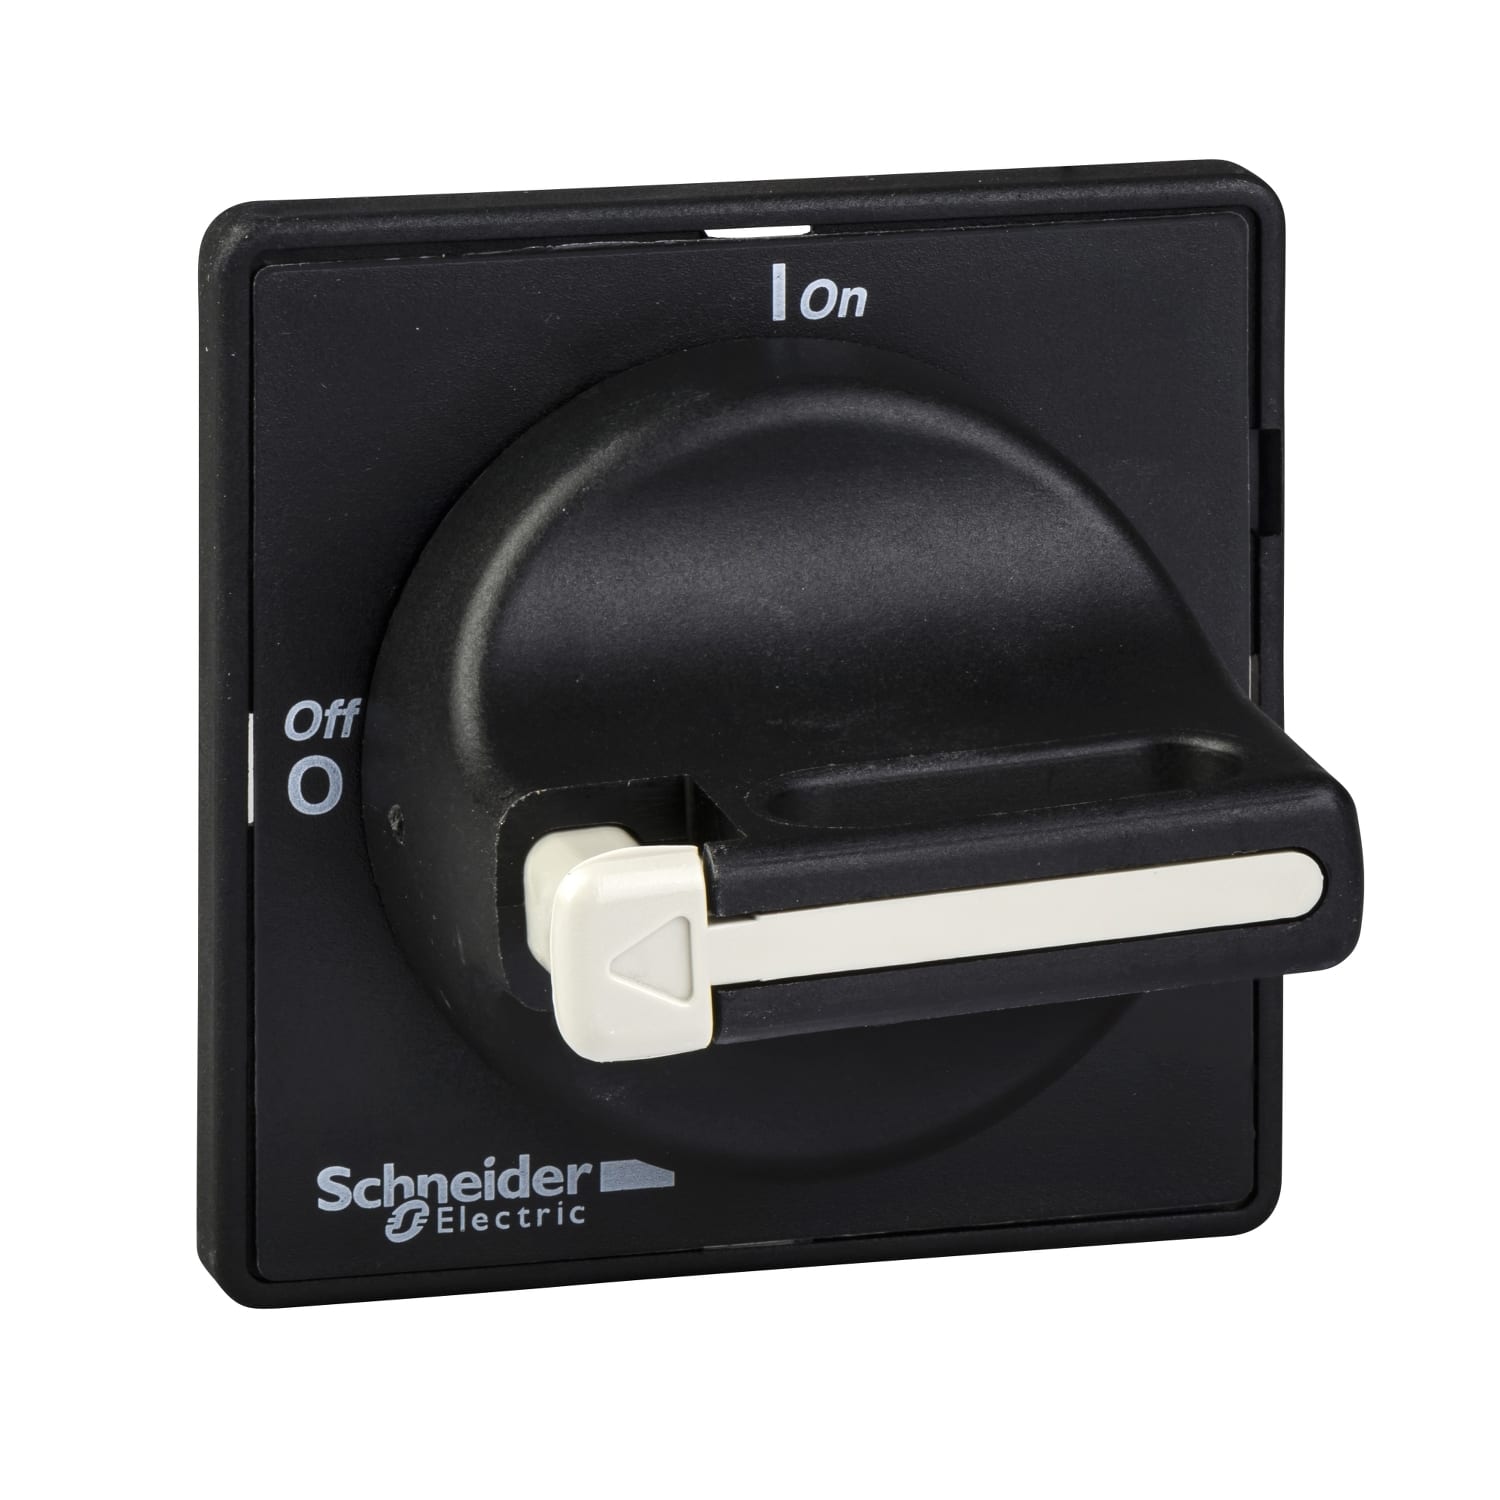 Schneider Electric - TeSys KAF - commande rotative frontale - pour V3,V4 - poignee noire